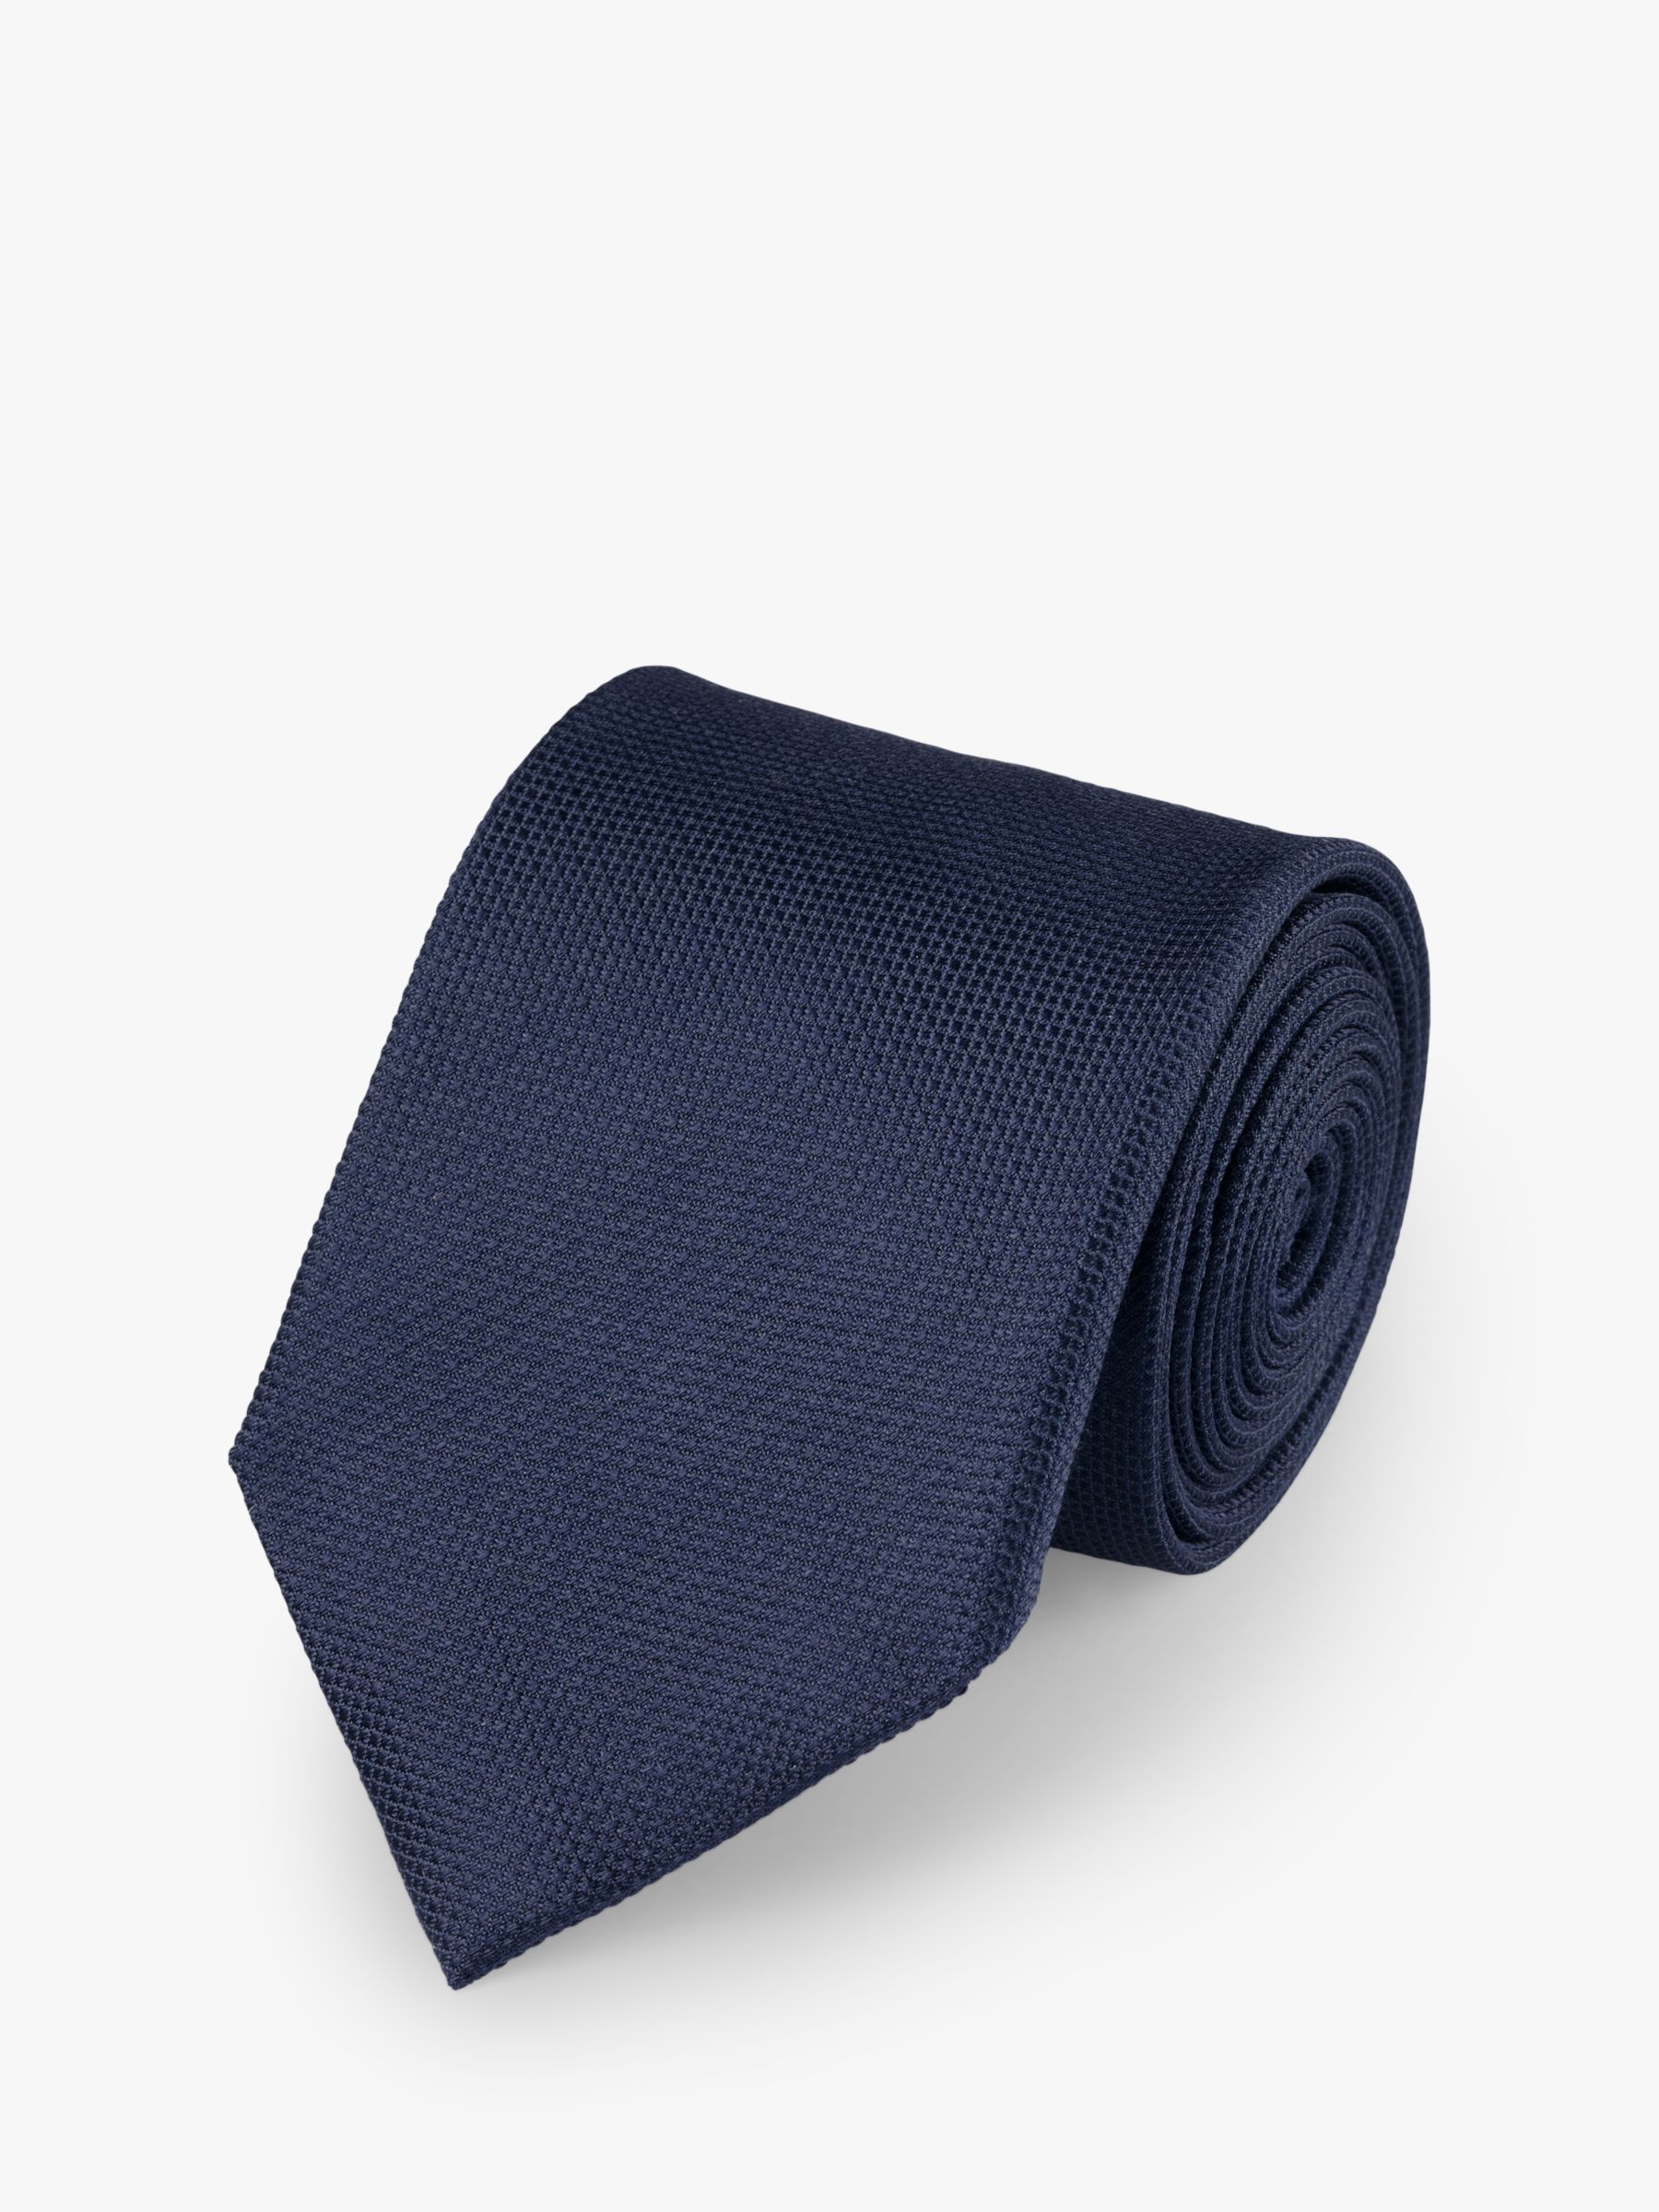 Charles Tyrwhitt Stain Resistant Silk Tie, Navy